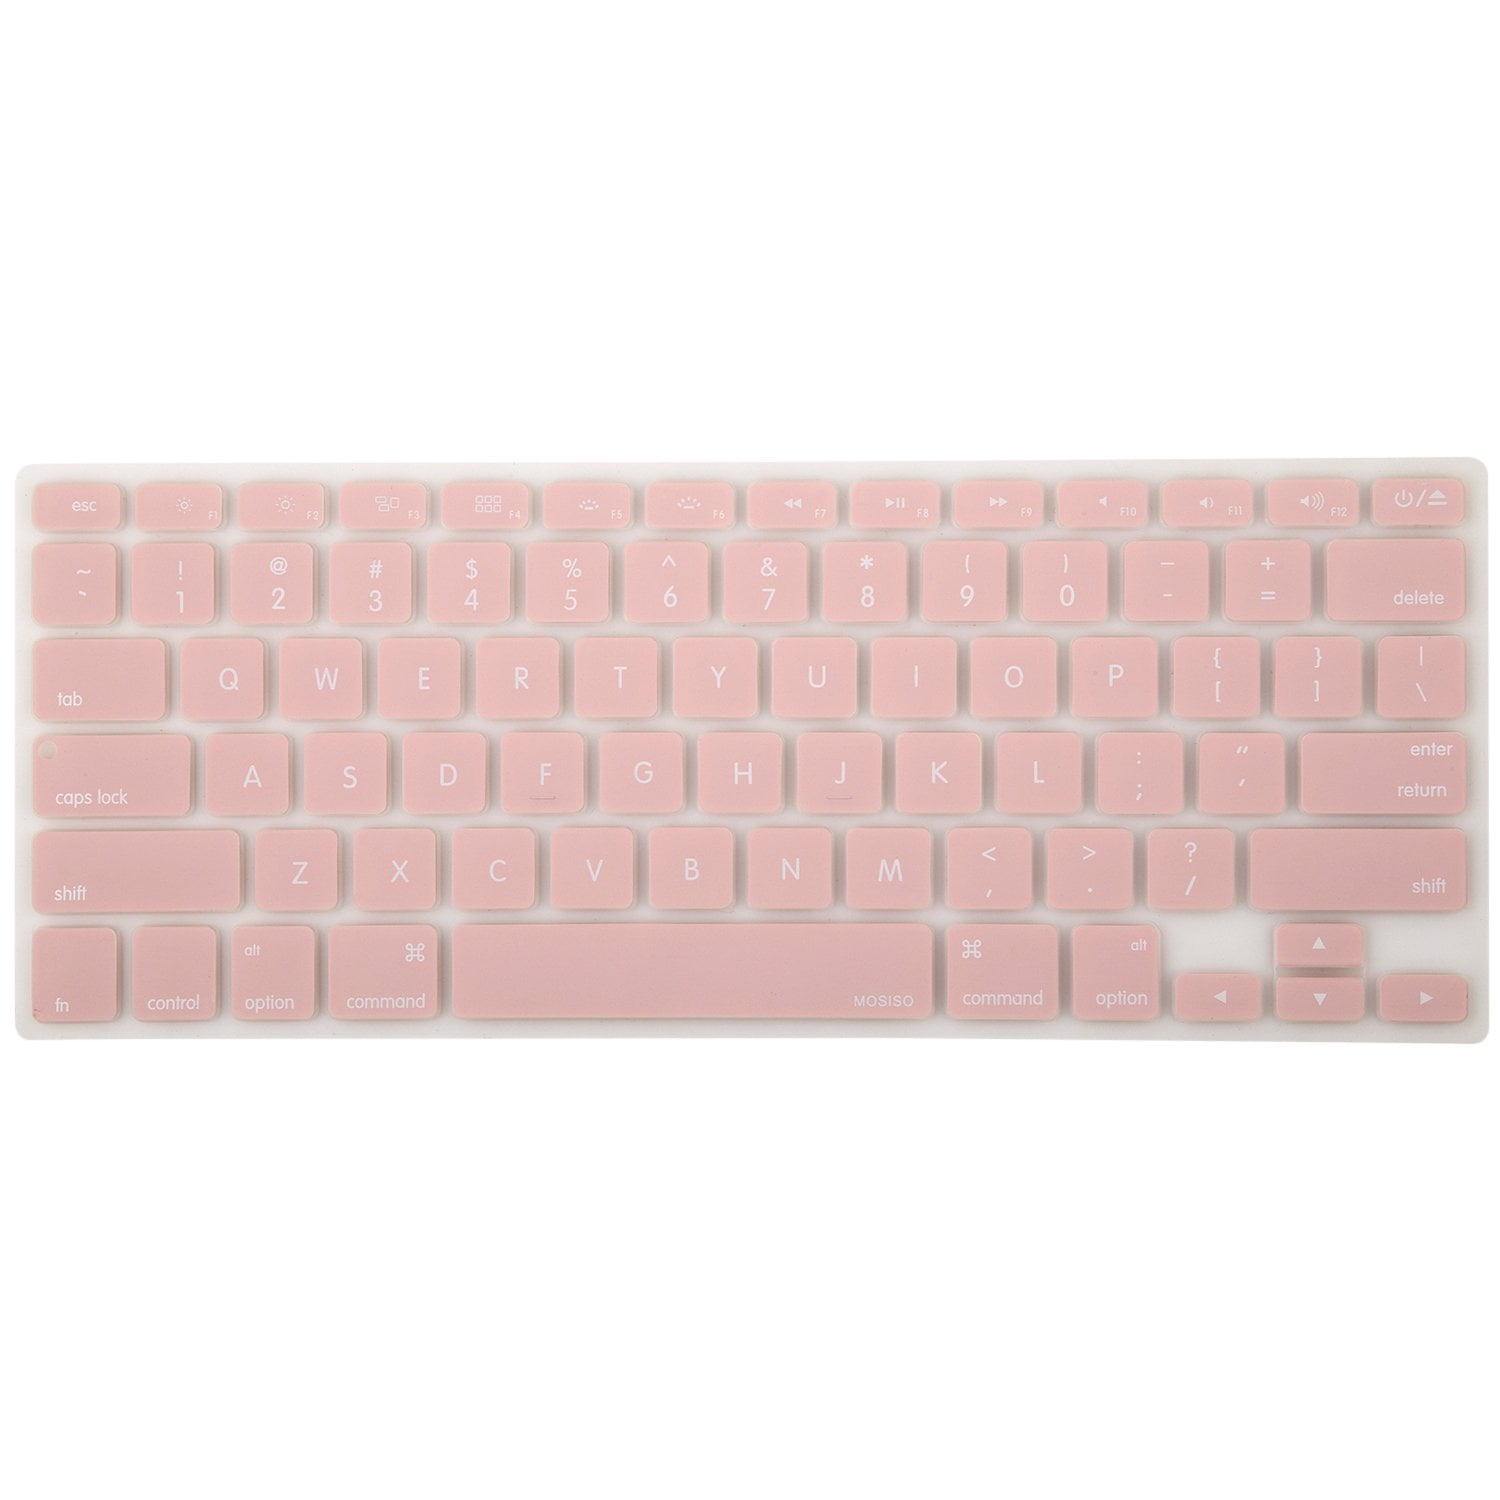 1-1010 Ore International 11.6-Inch Air Keyboard Protector Pink